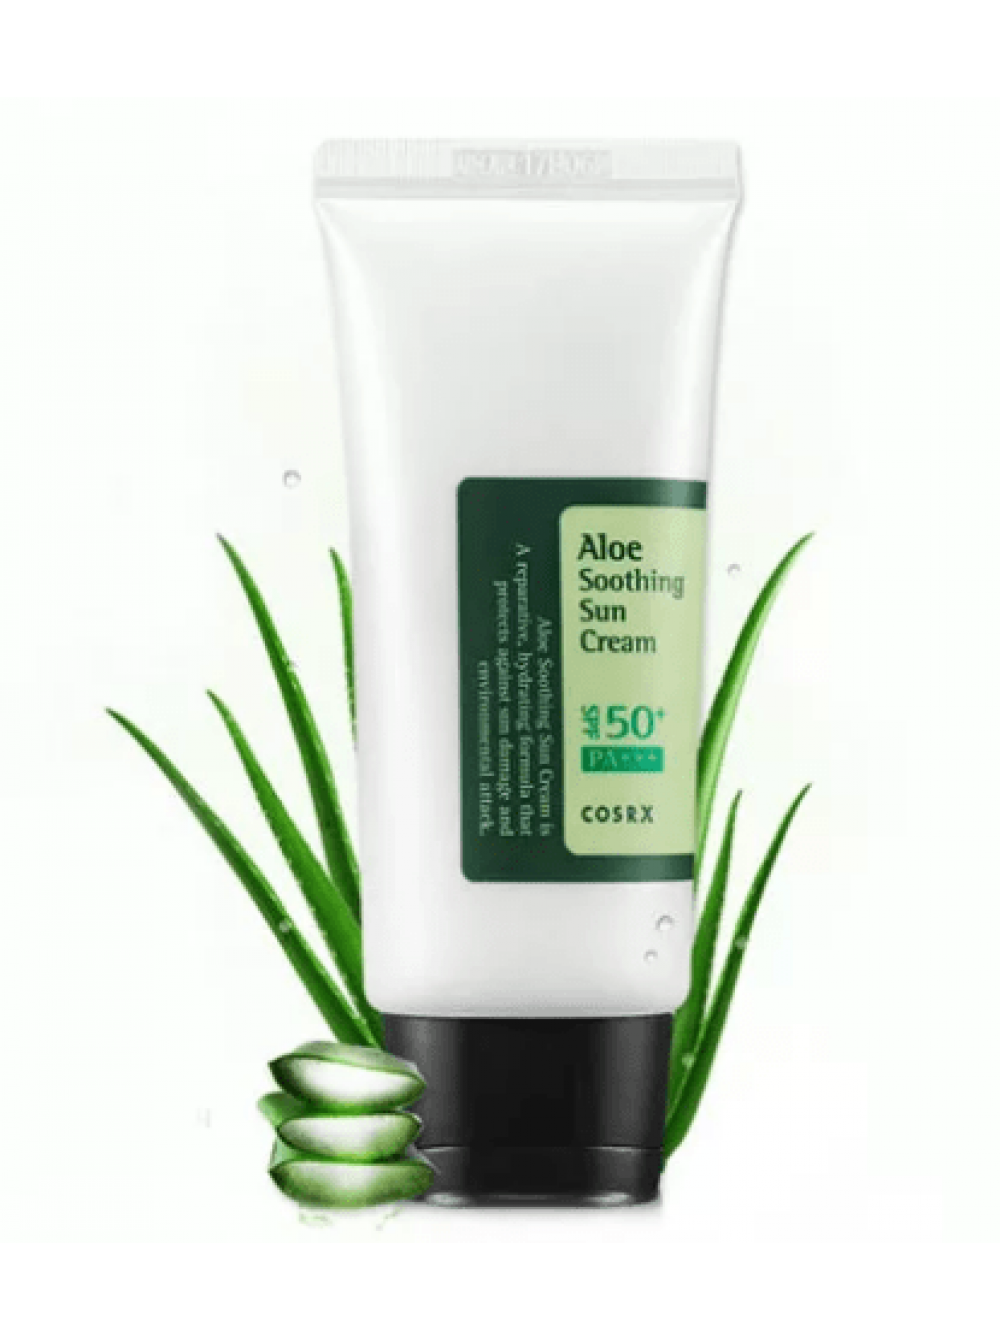 Aloe soothing sun cream. Крем SPF 50 Aloe Soothing Sun Cream. COSRX SPF алоэ. COSRX Aloe Soothing Sun Cream spf50 pa+++.